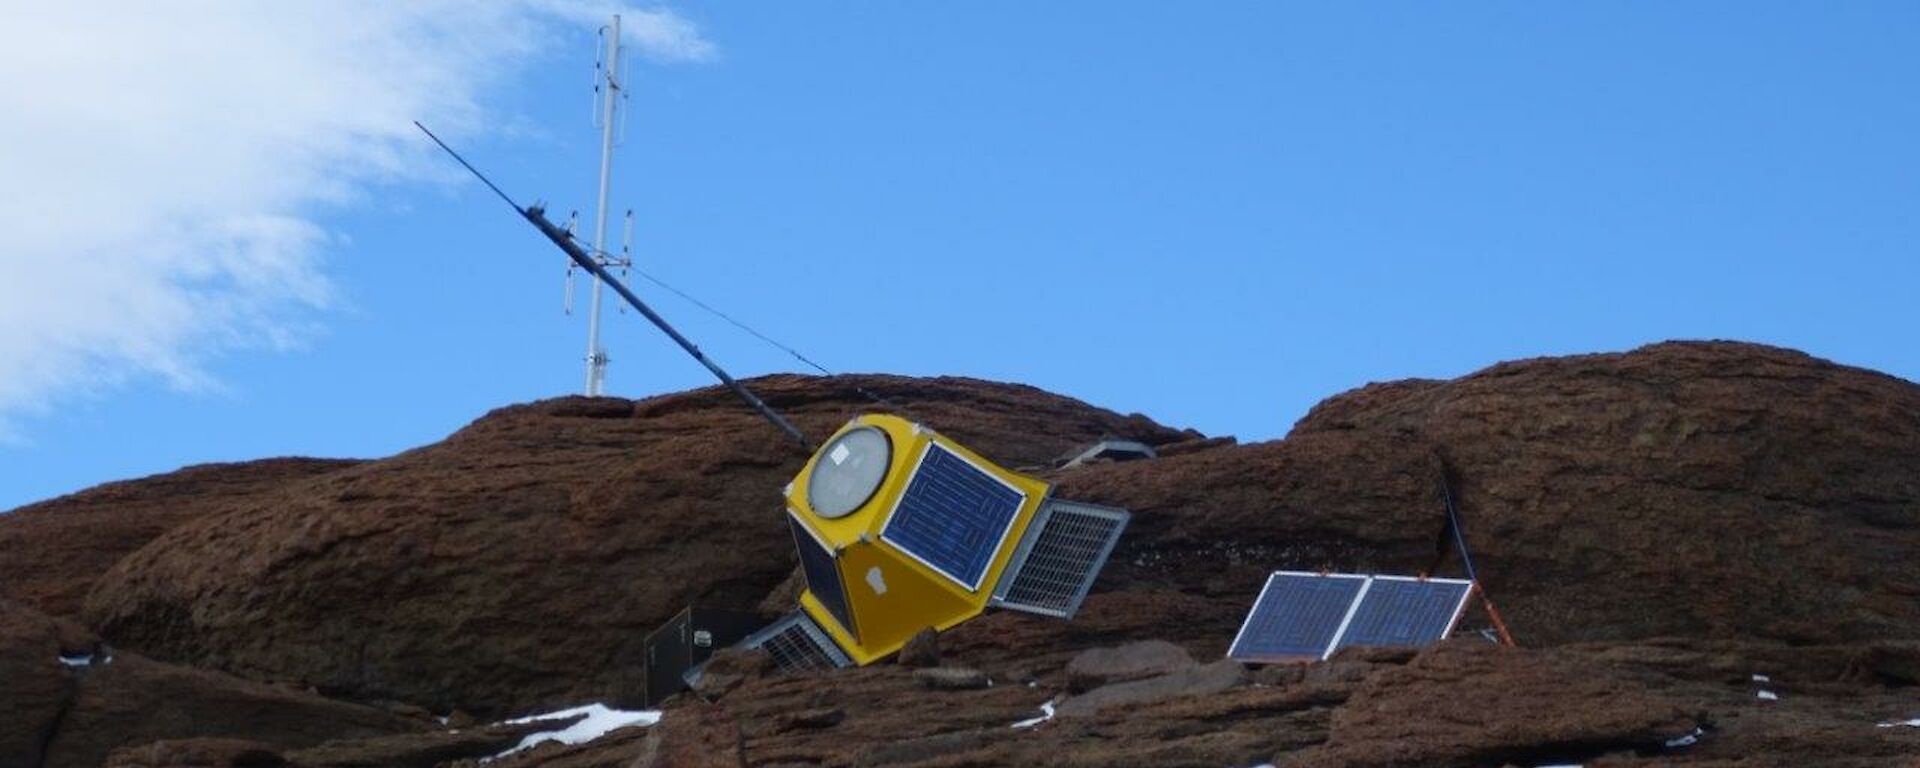 A yellow encased radio transmitter sits fallen against rocks